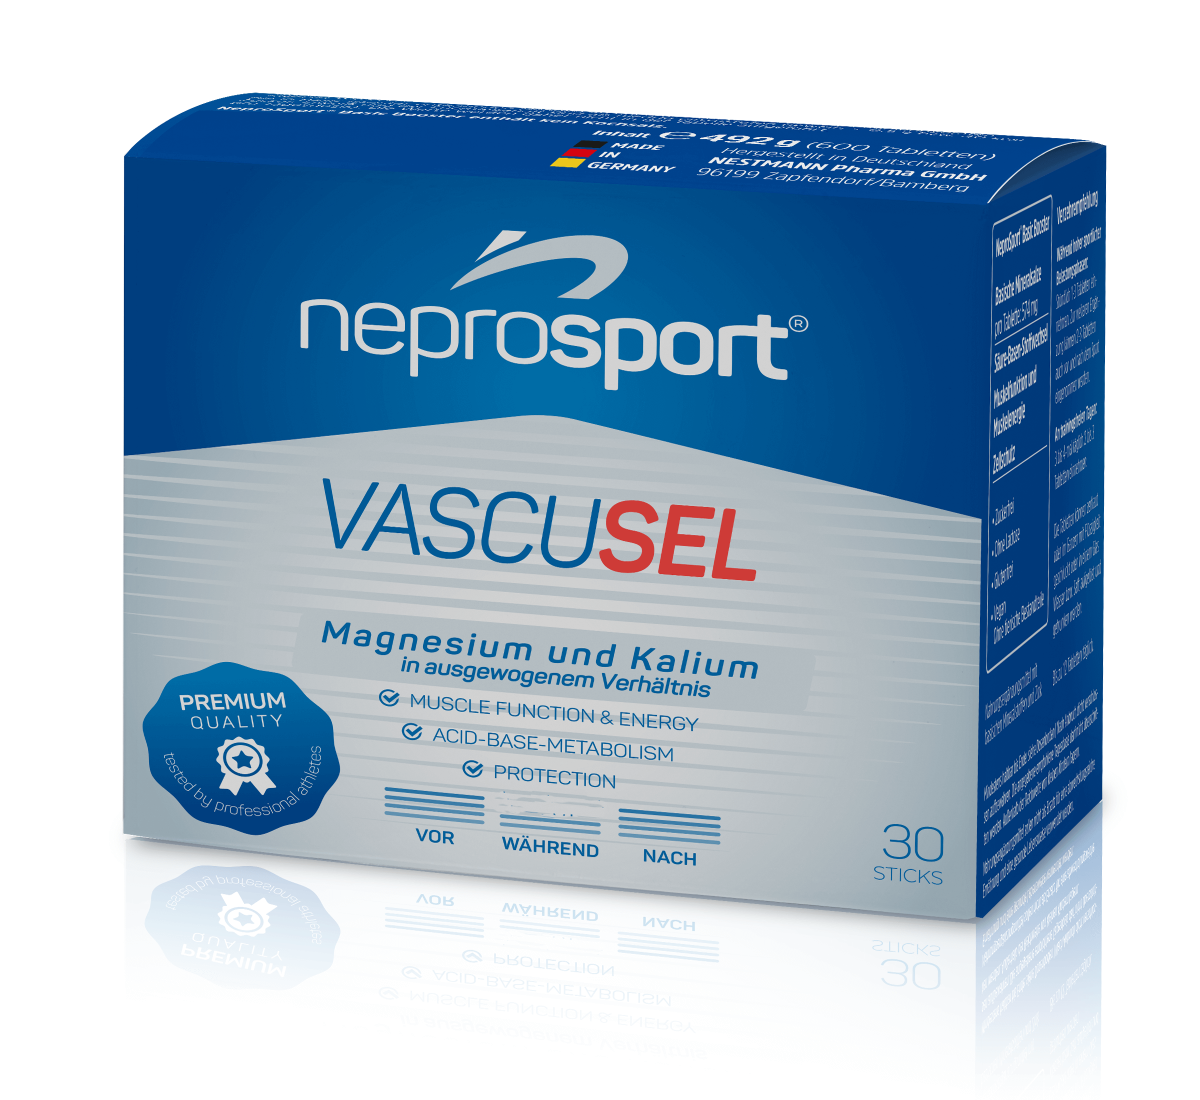 NeproSport VascuSel